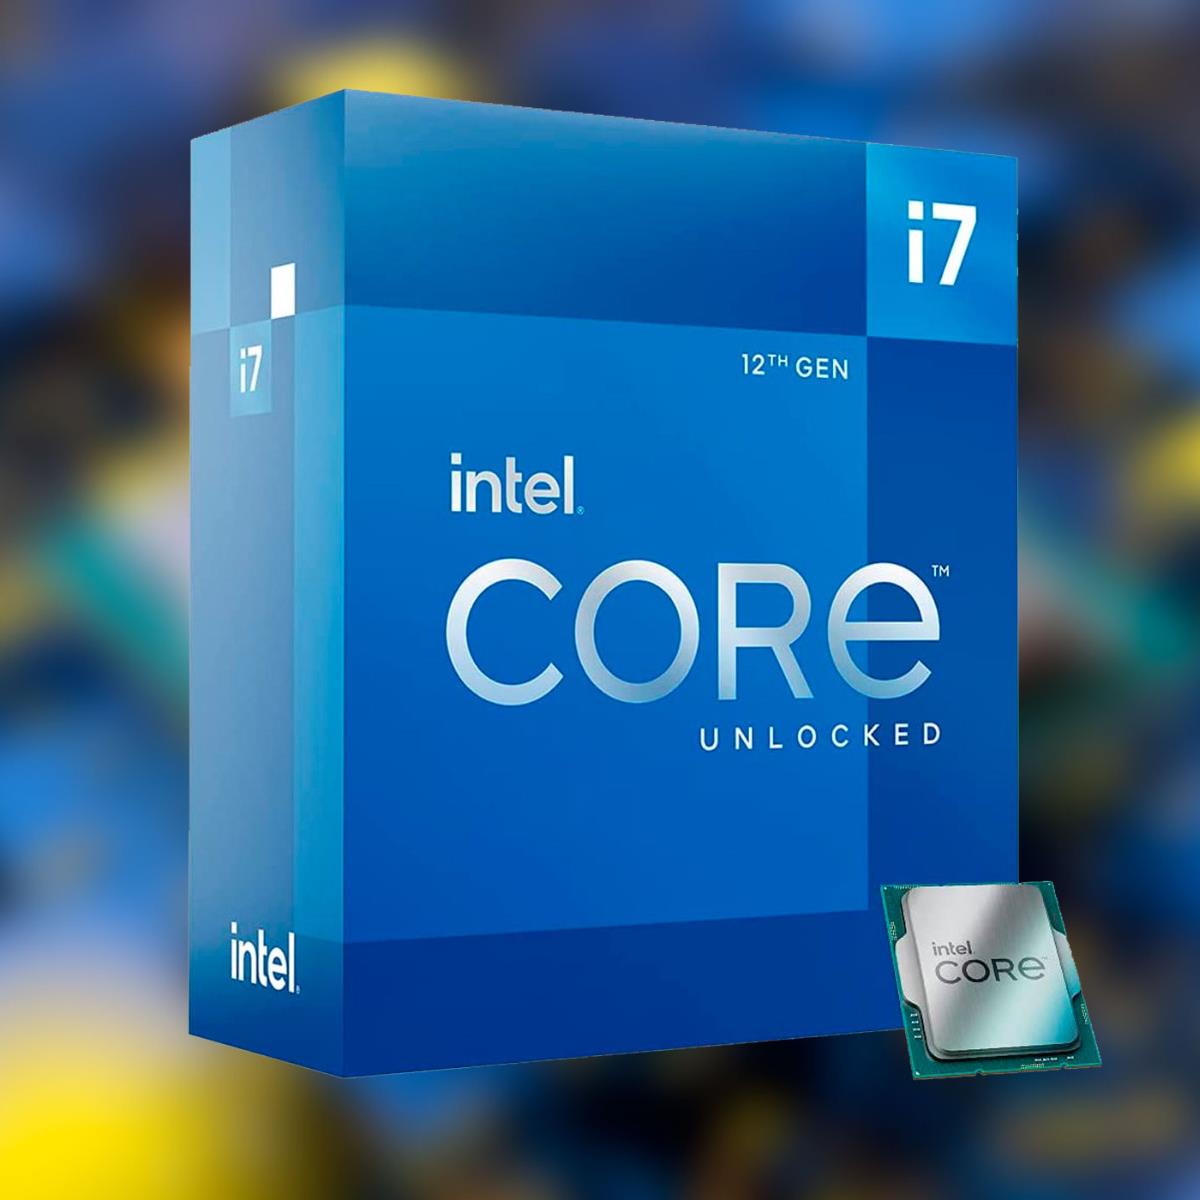 Intel Core i7-12700K Alder Lake CPU Thrashes Ryzen In Single 